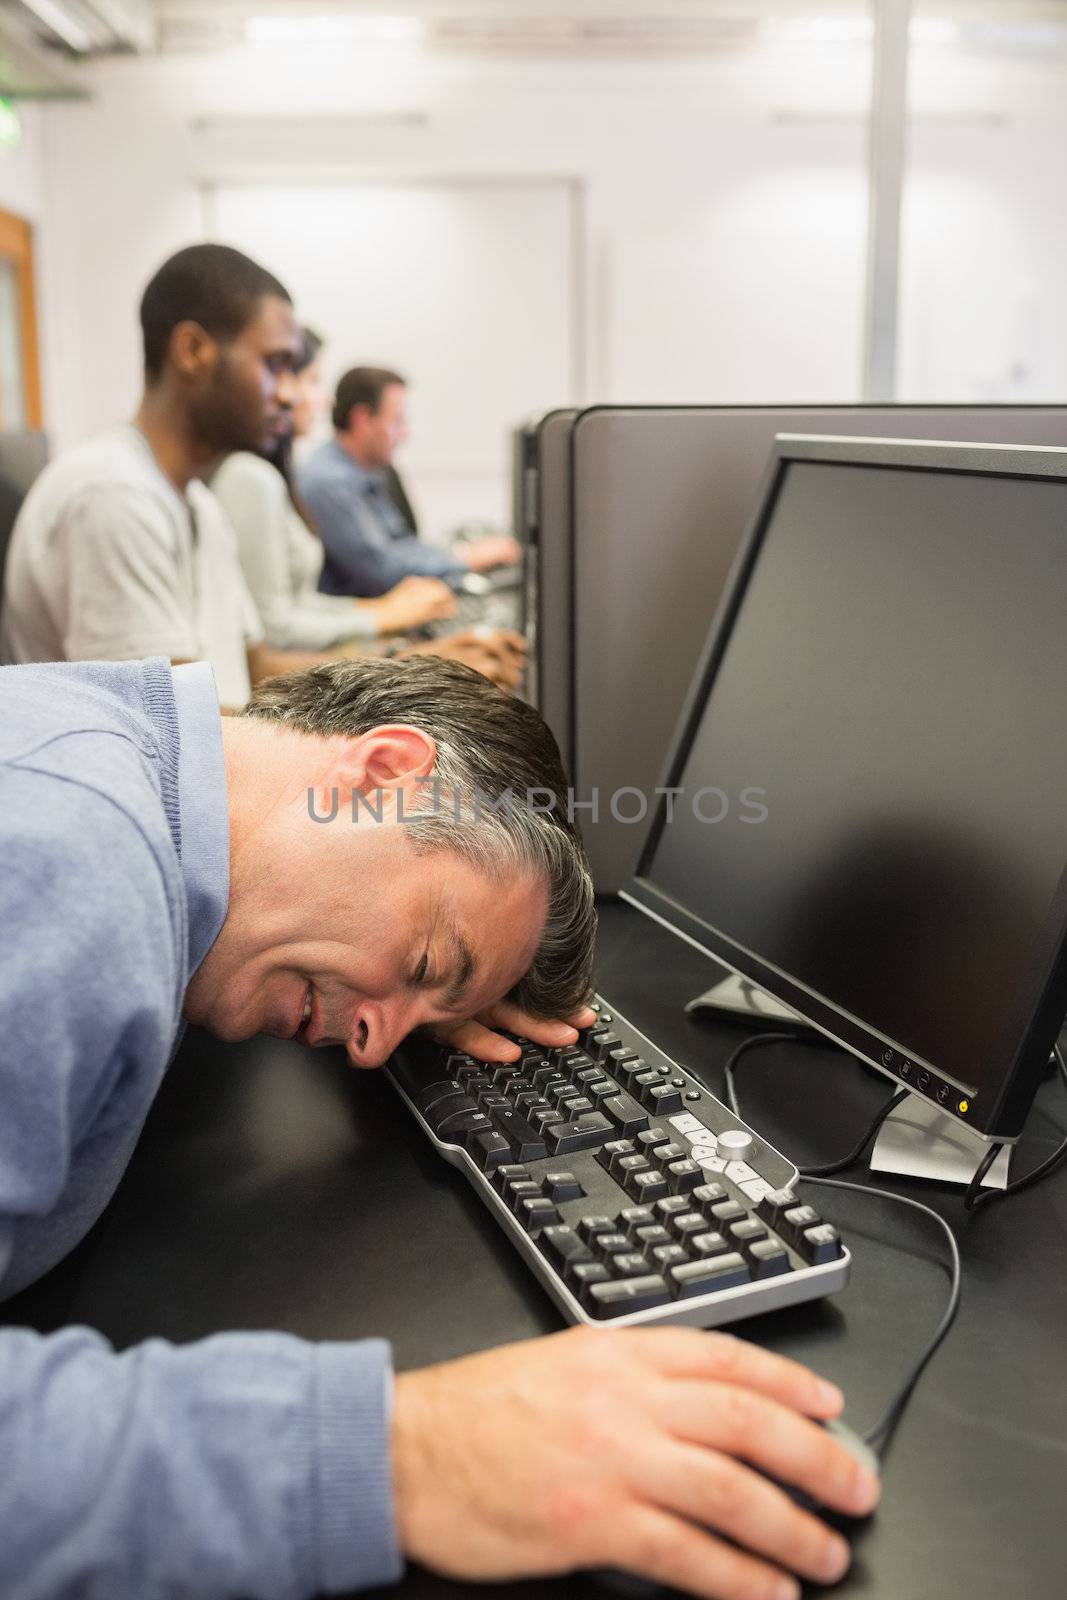 Man sleeping at the keyboard in computer class by Wavebreakmedia